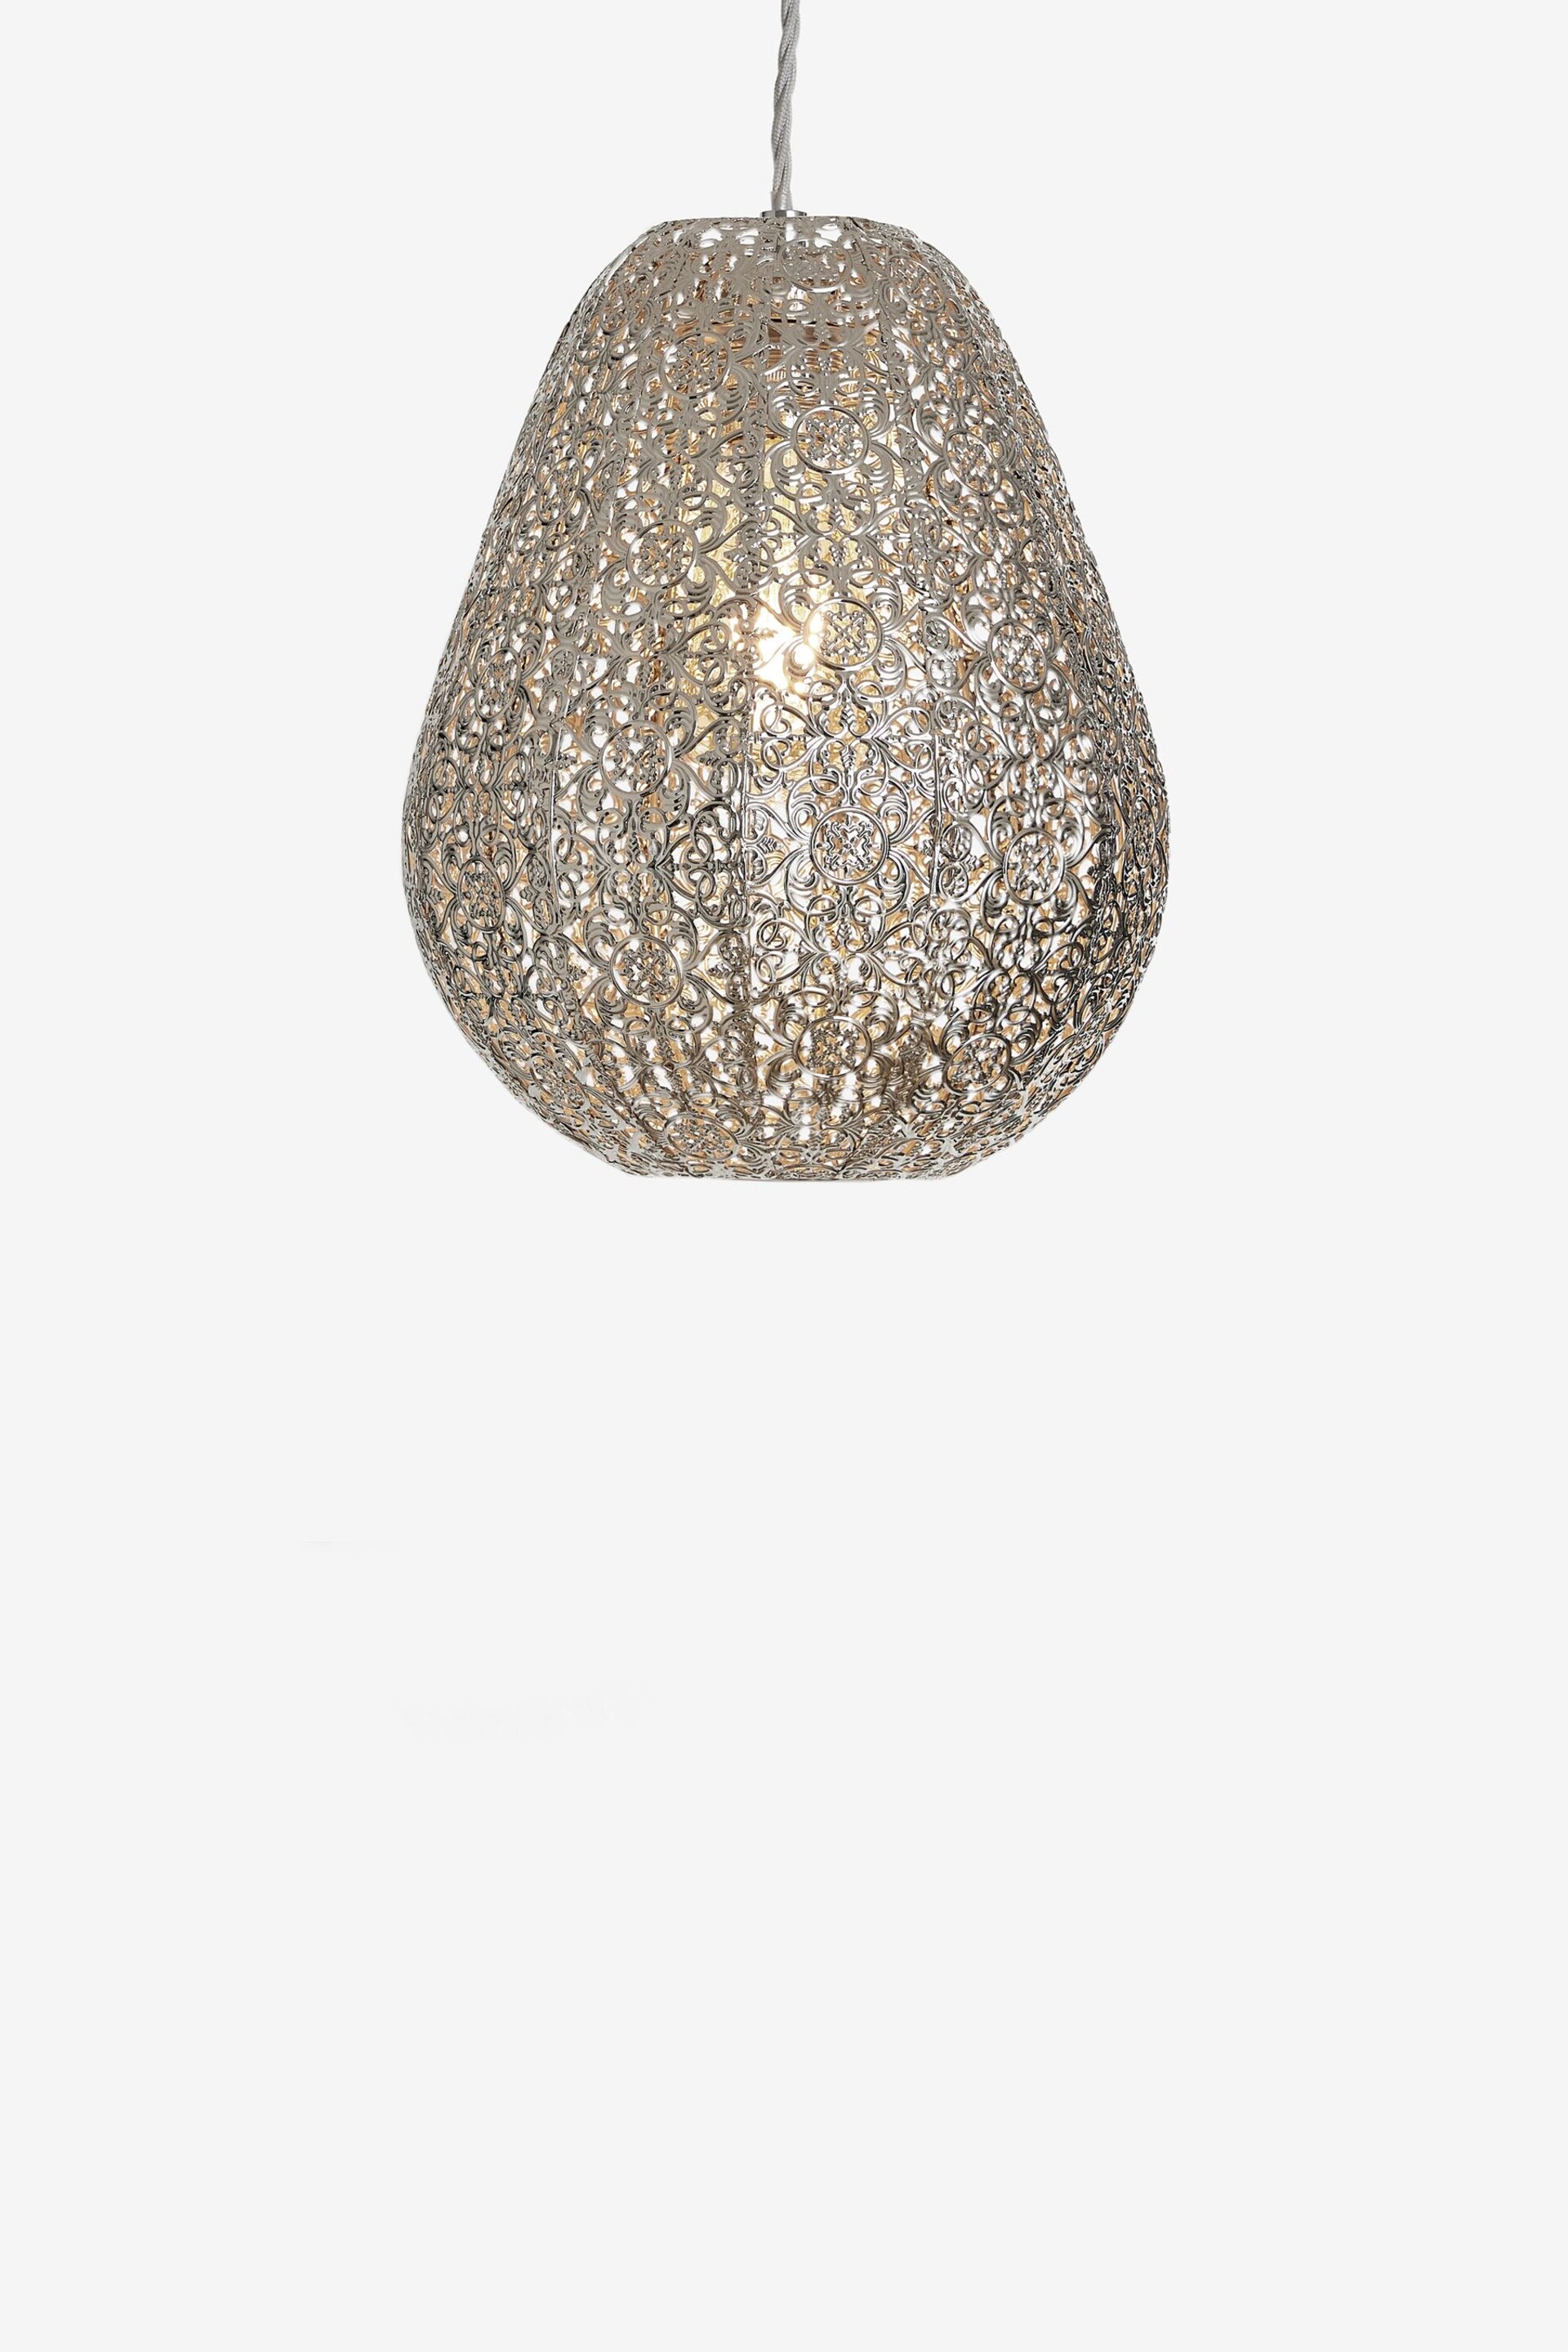 Nickel Oriana Easy Fit Pendant Lamp Shade - Image 3 of 5